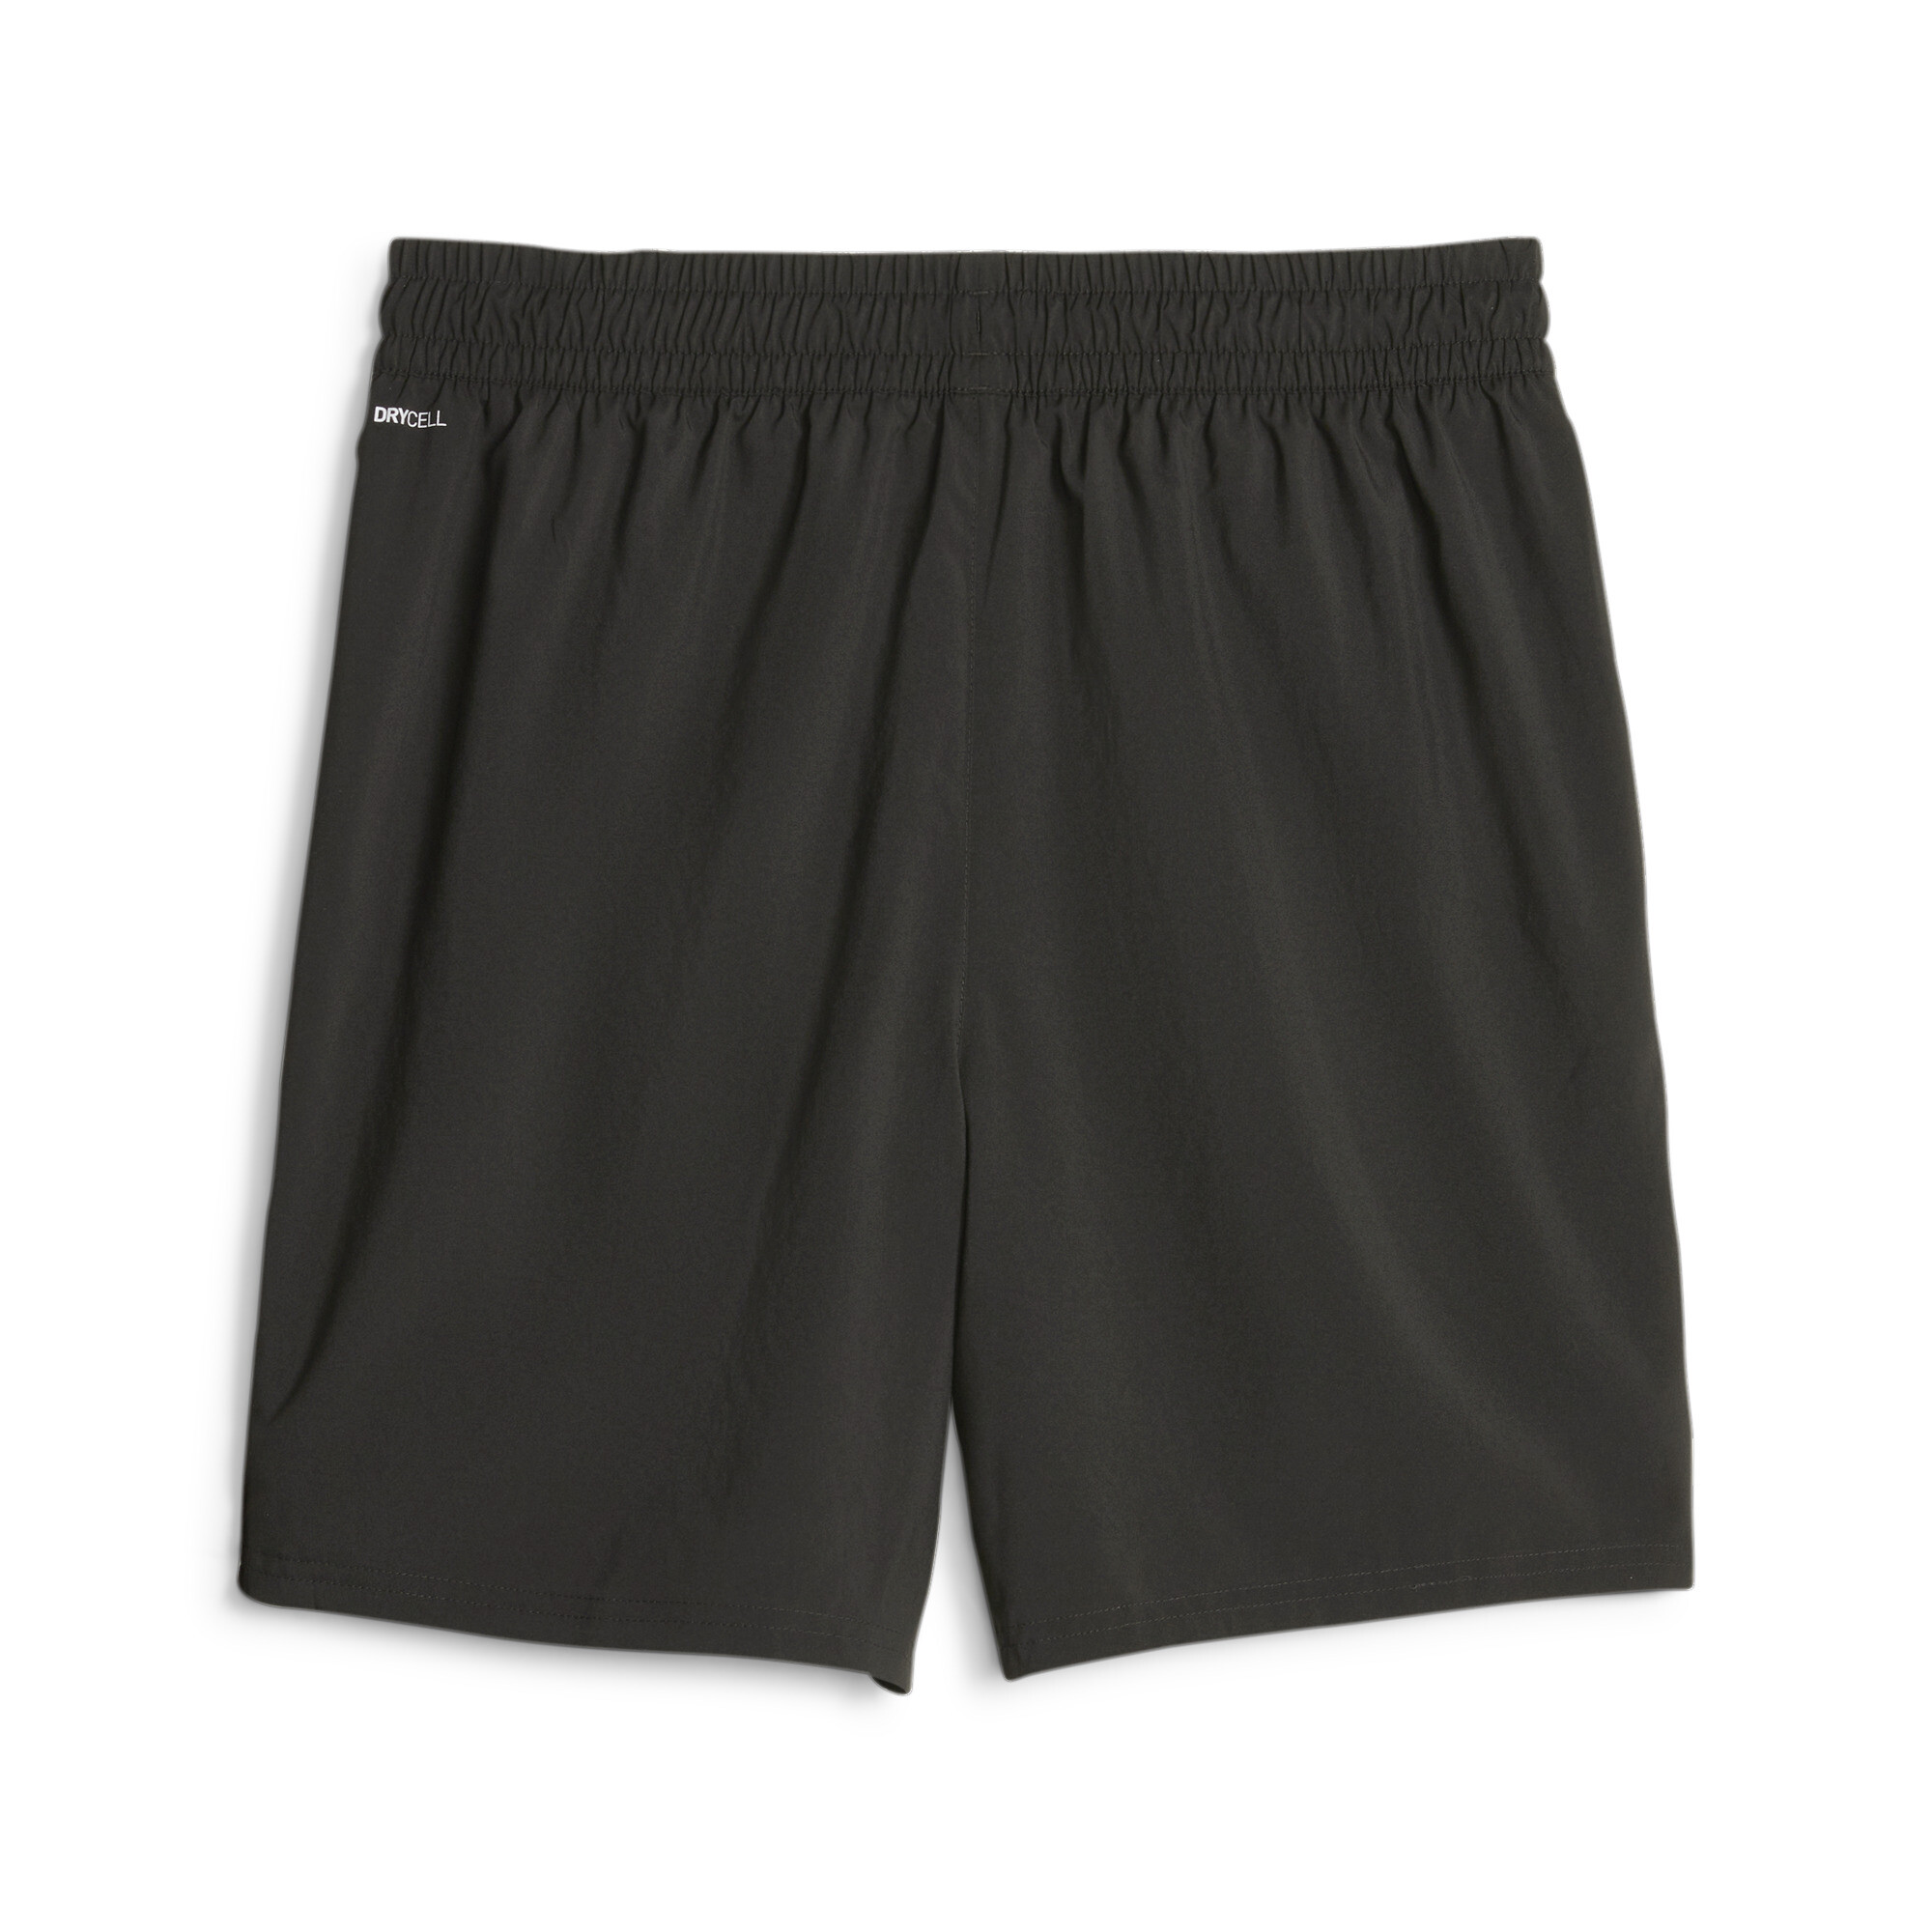 Men's PUMA Fit 7 Training Shorts In Black, Size Medium